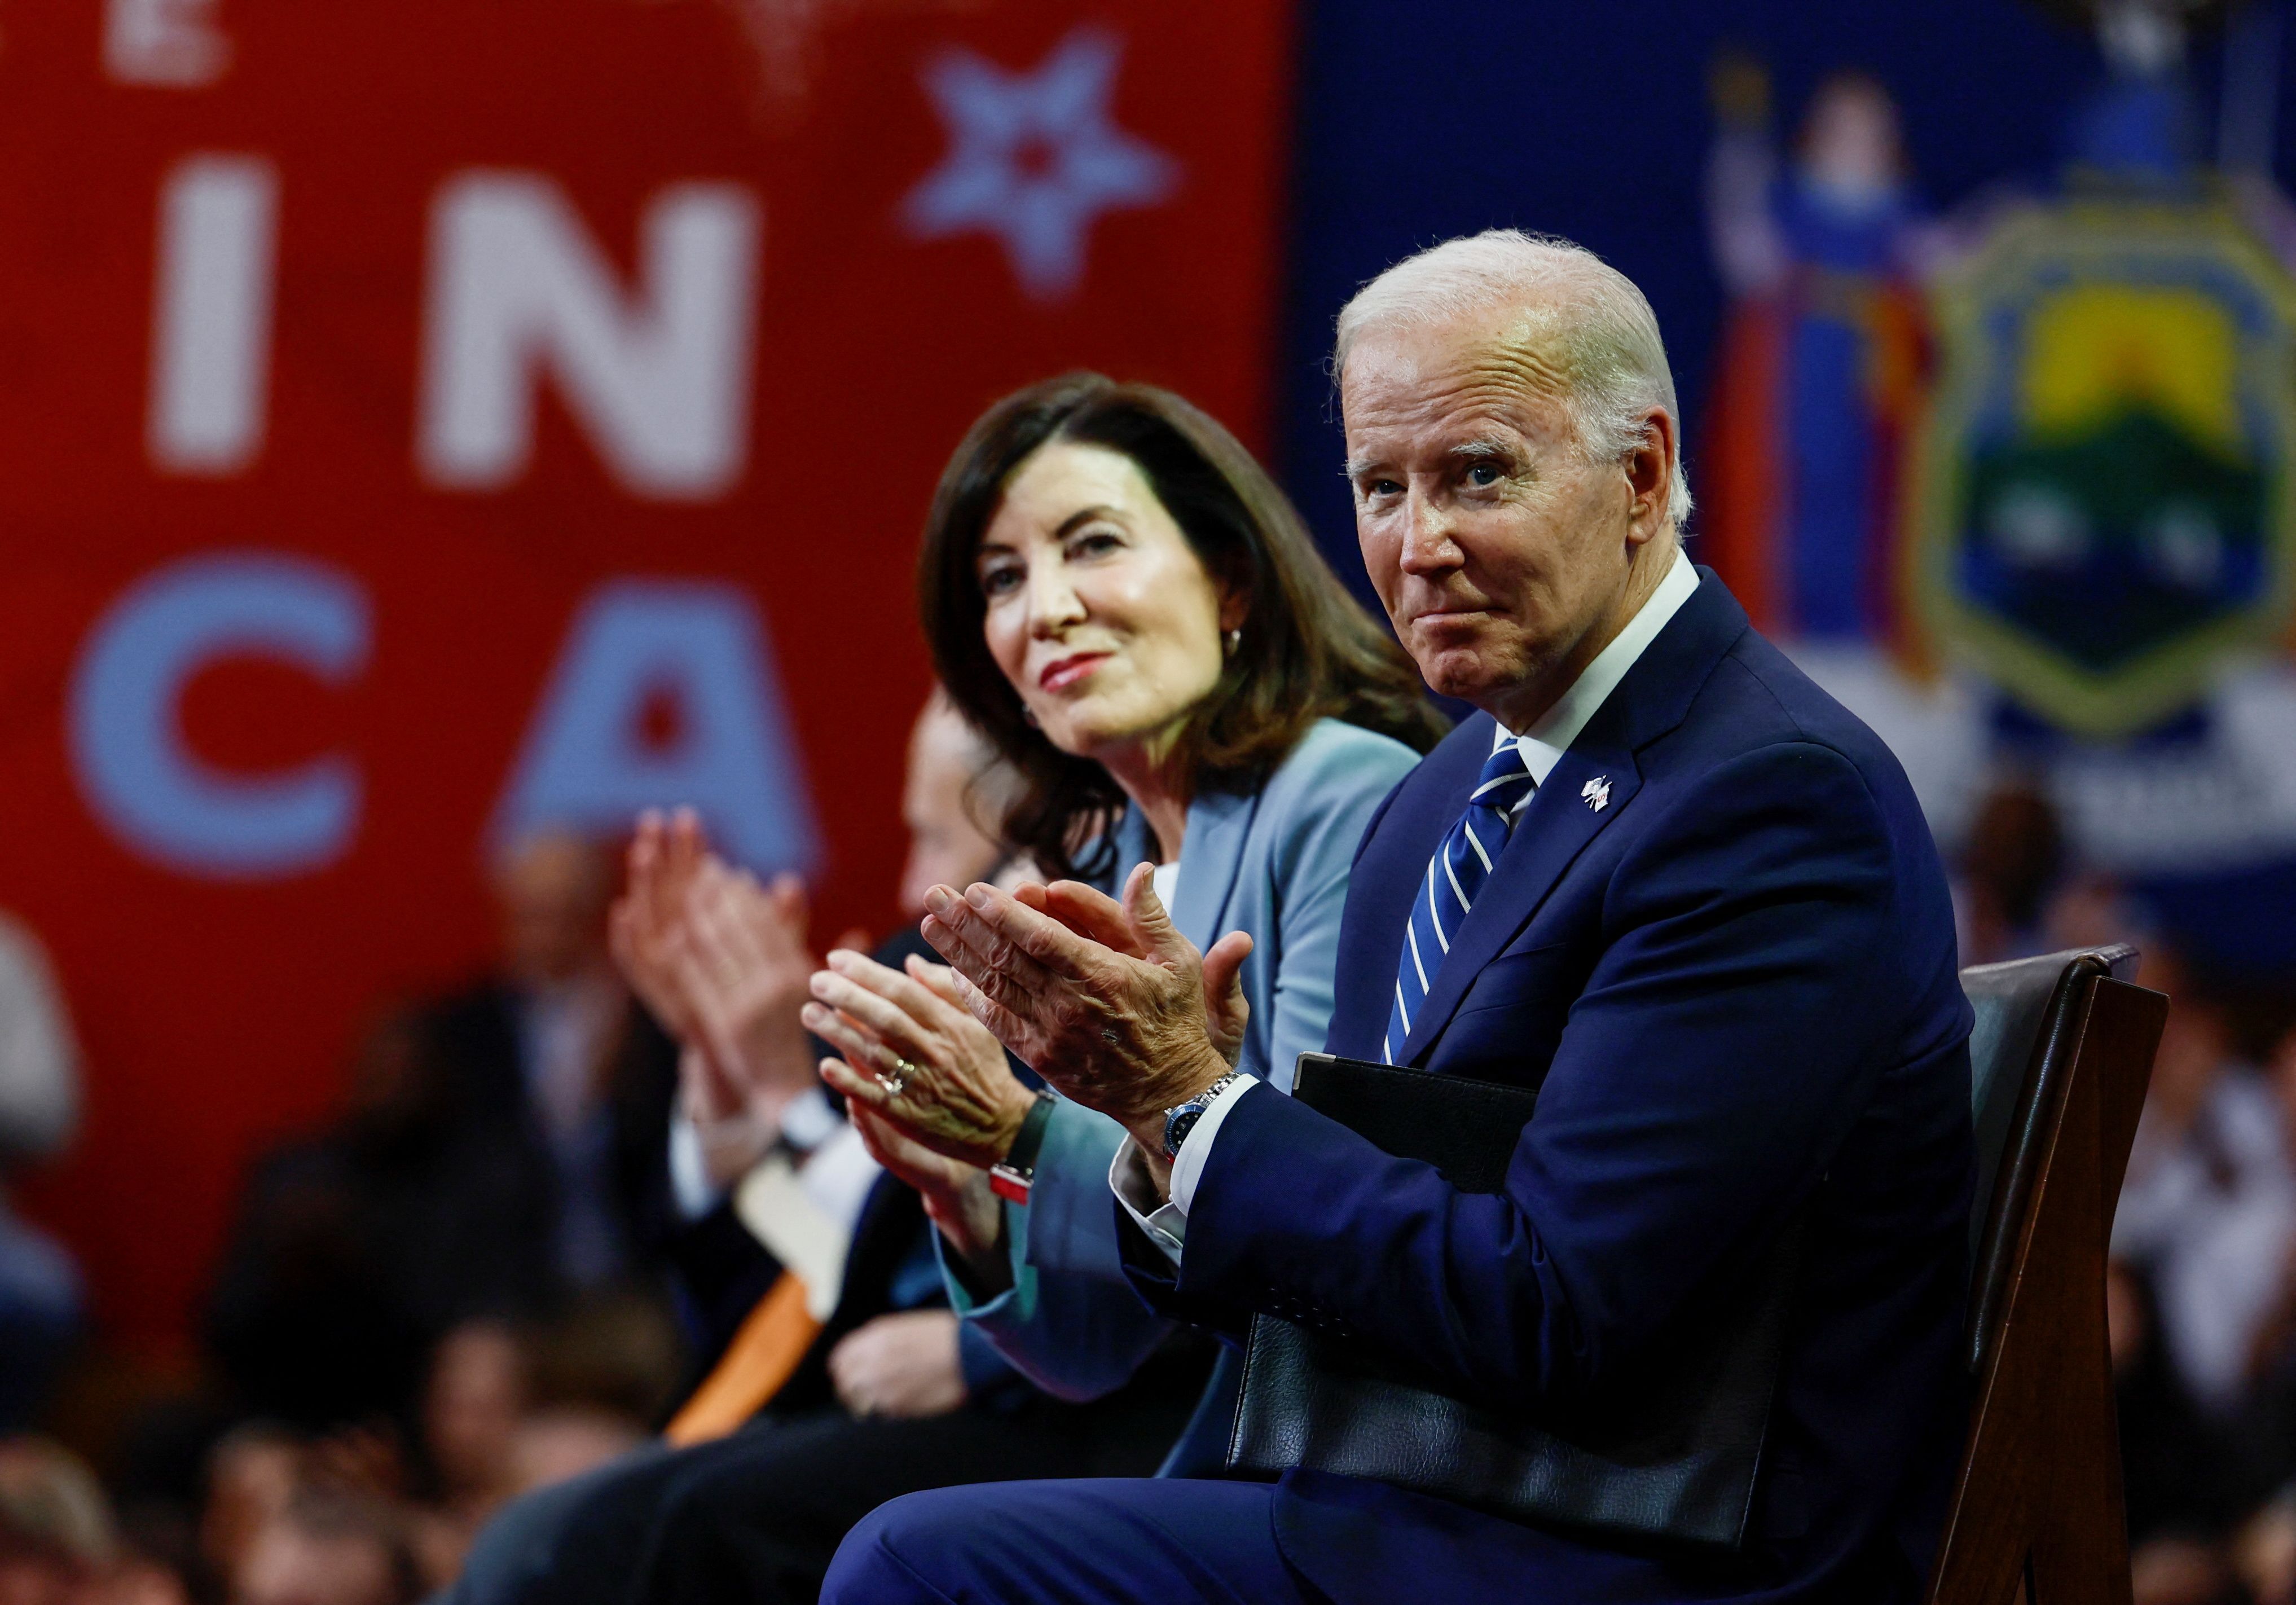 Biden faces years of acrimony if Democrats get a midterm election drubbing  | CNN Politics